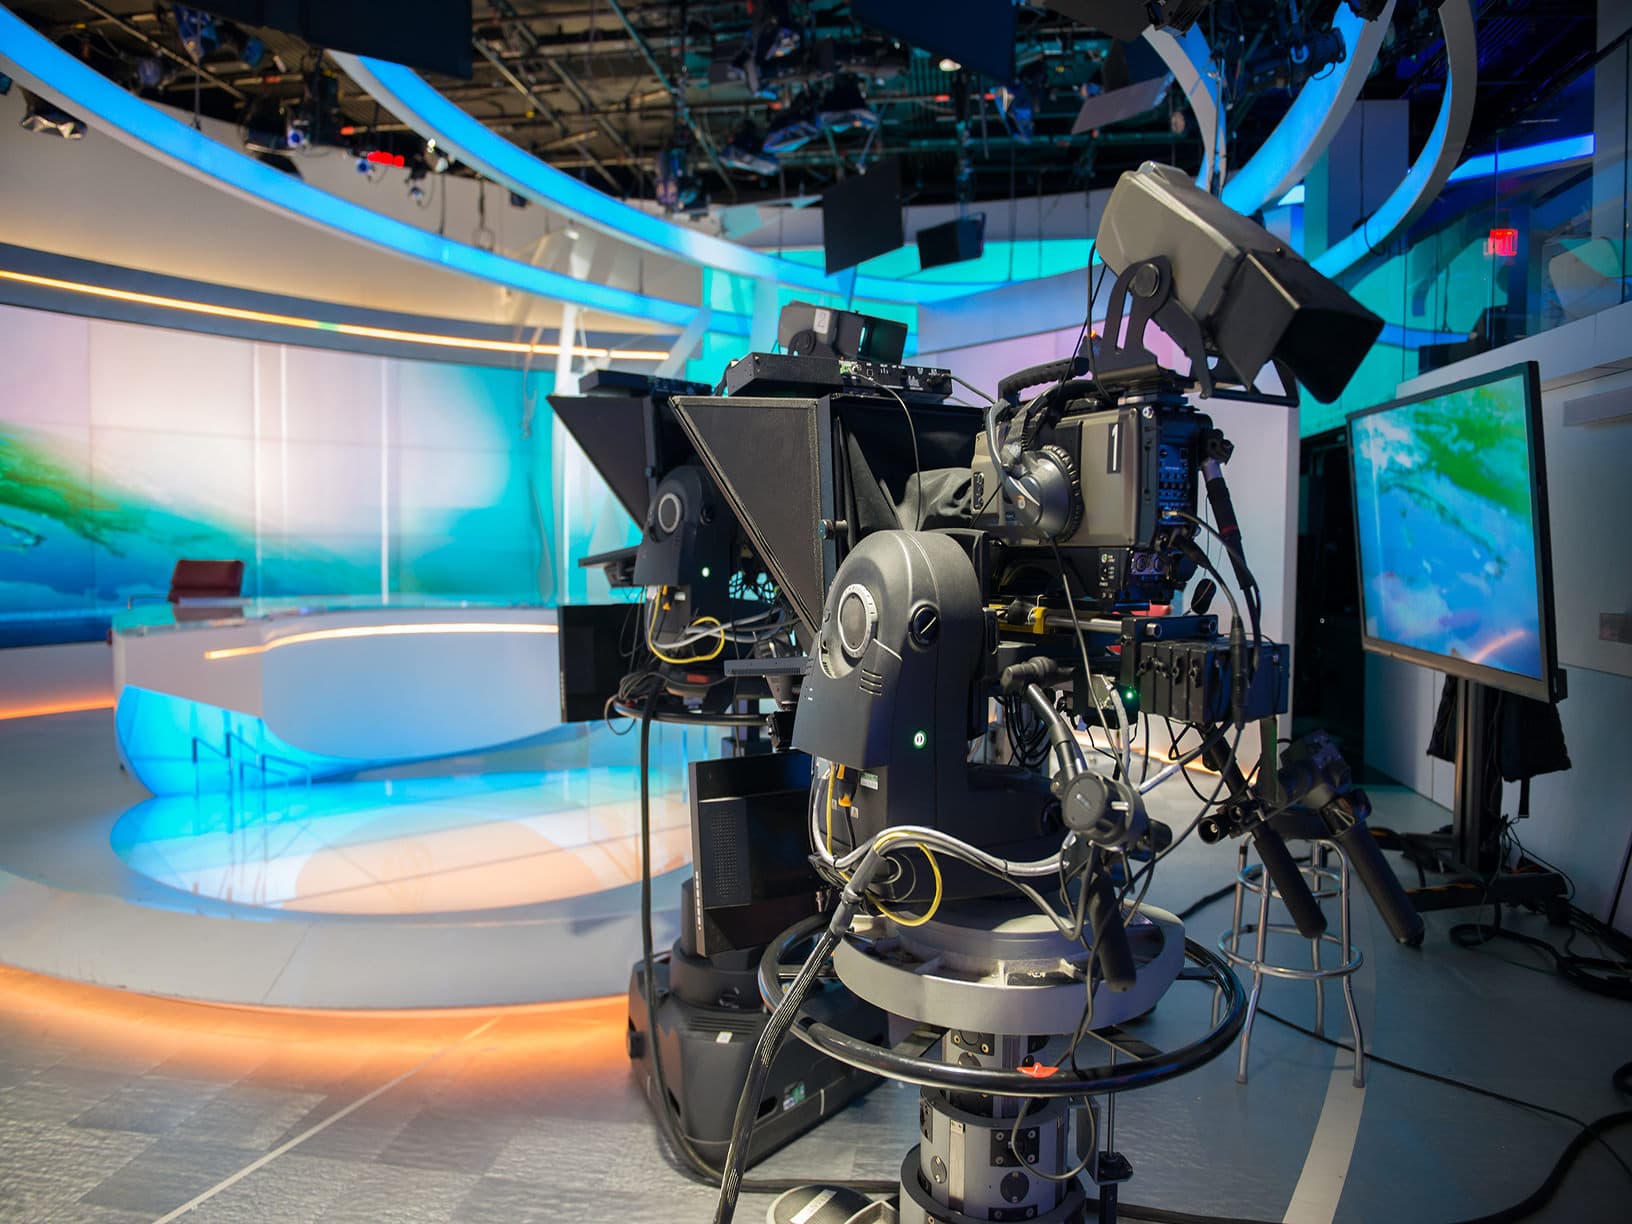 TV NEWS cast studio with camera and lights